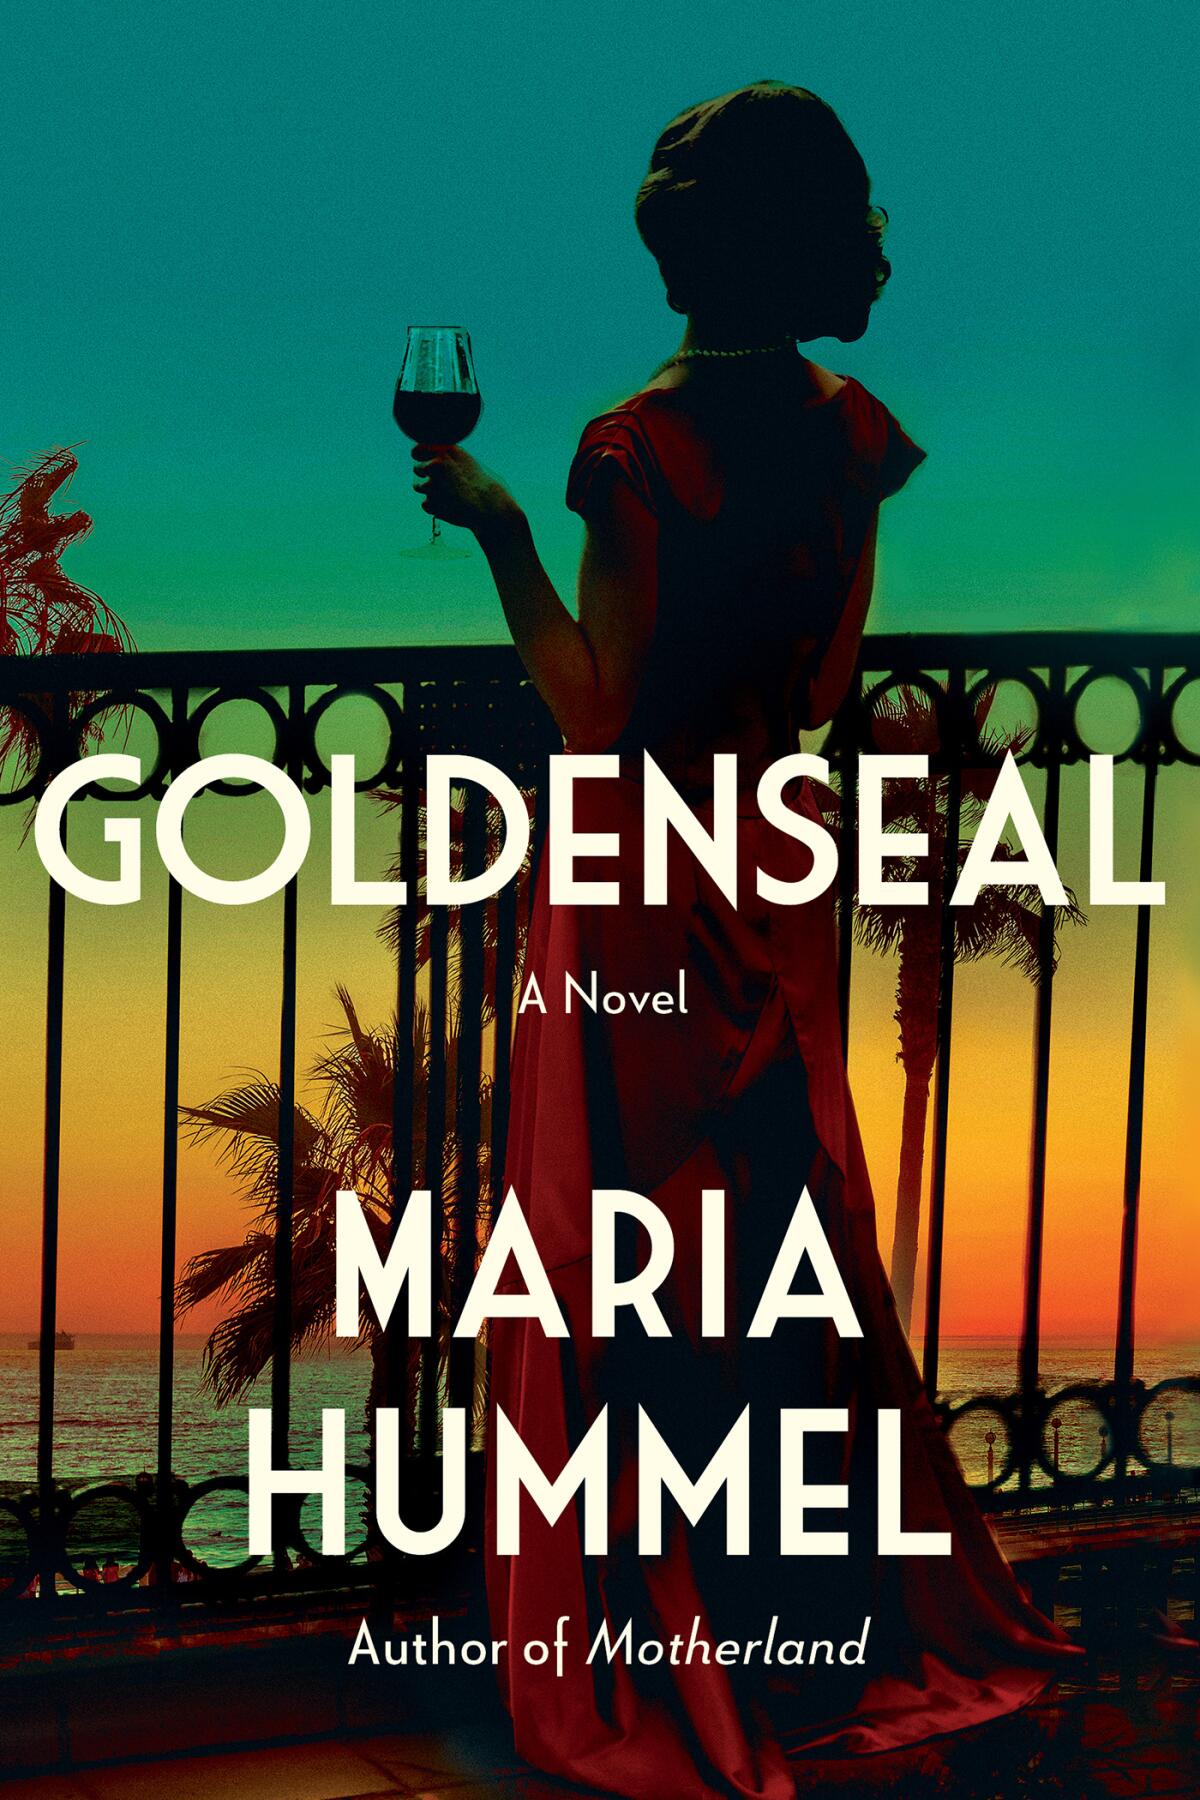 "Goldenseal," by Maria Hummel